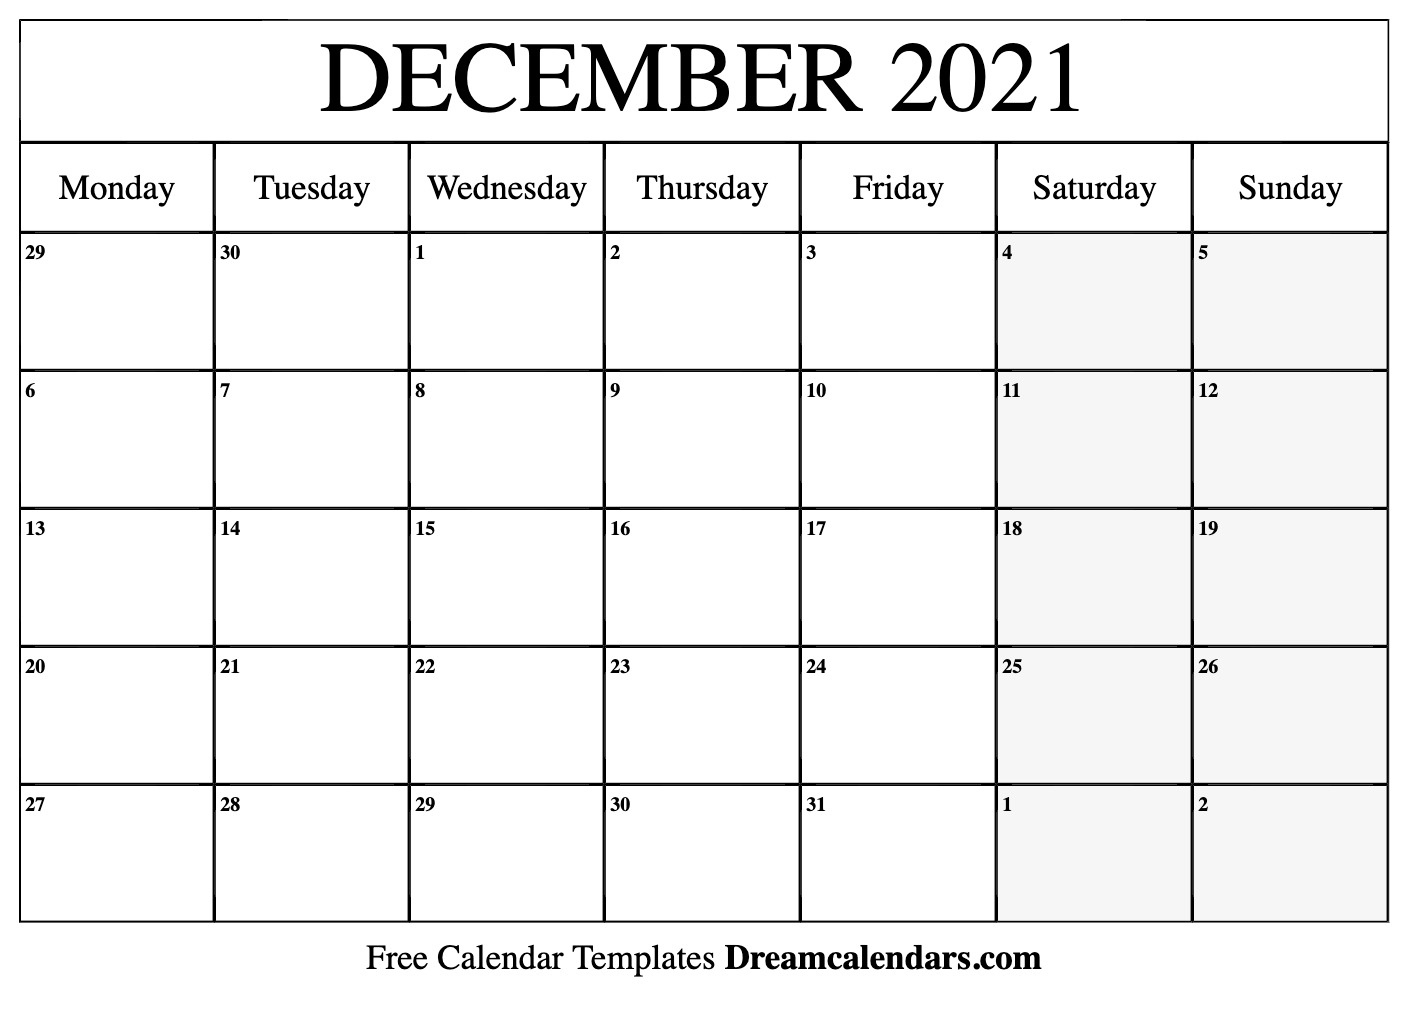 December 2021 Calendar | Free Blank Printable Templates 2021 Calendar Free Printable